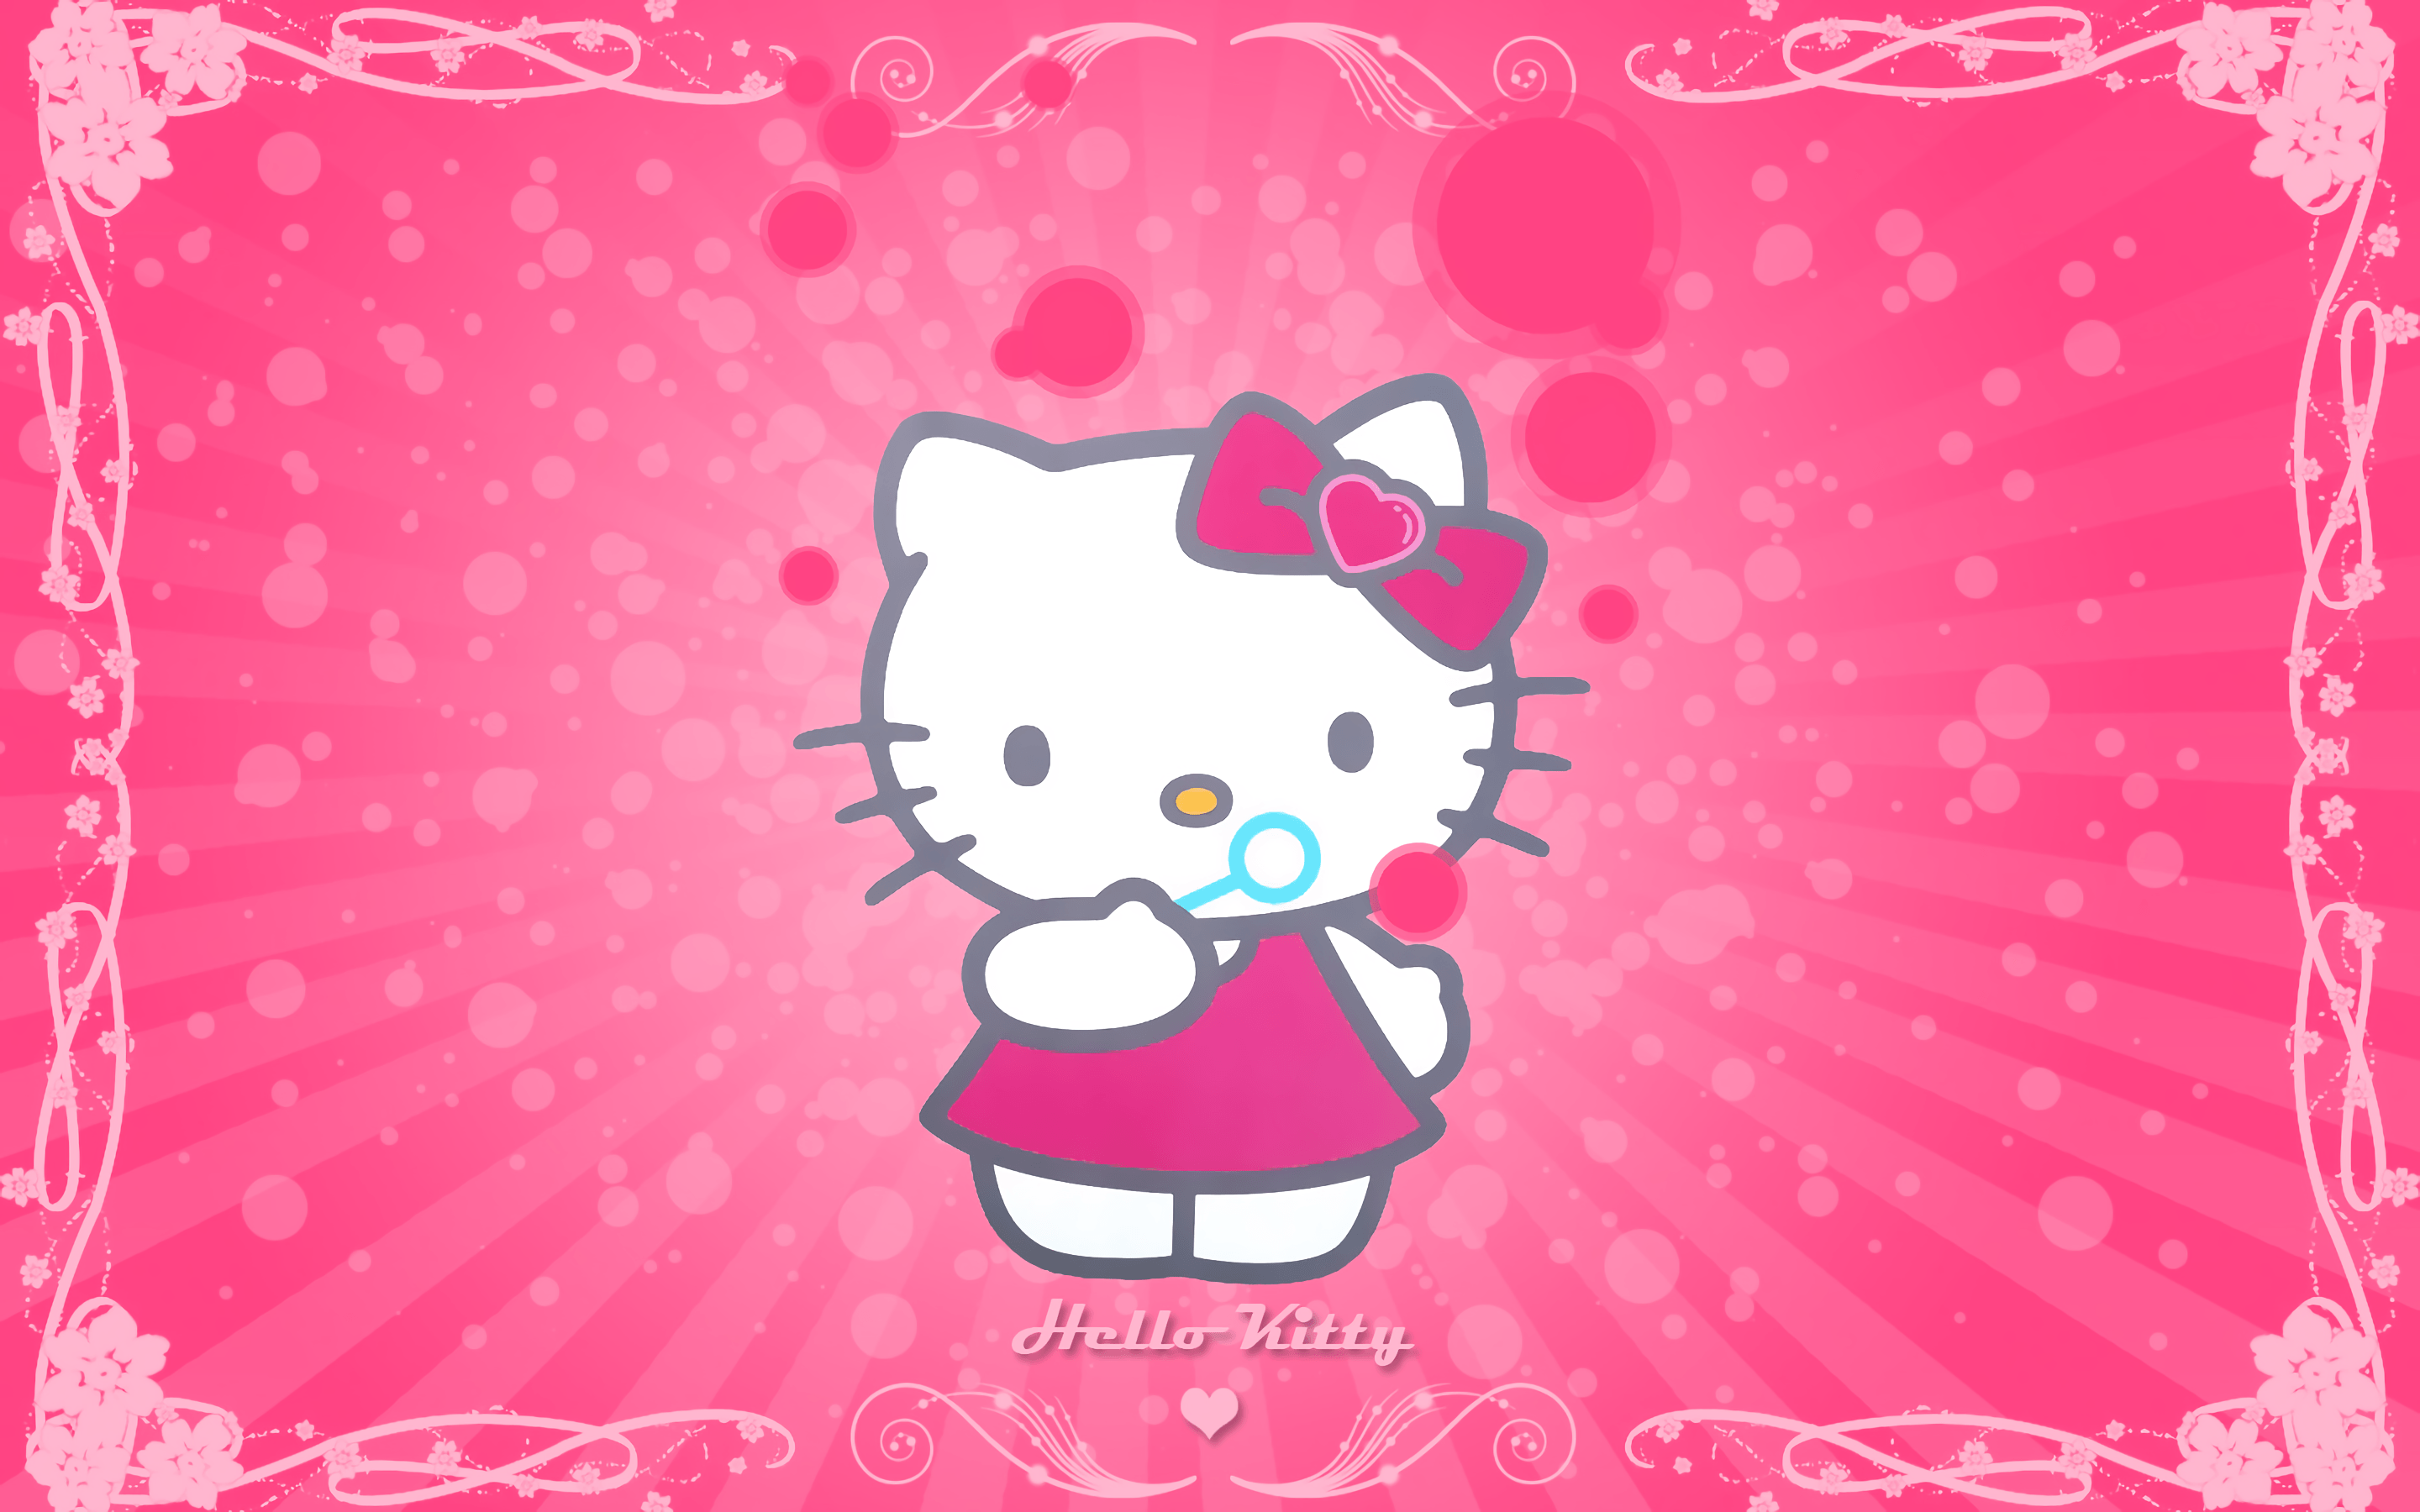 41 Hello Kitty Pictures Background  WallpaperSafari